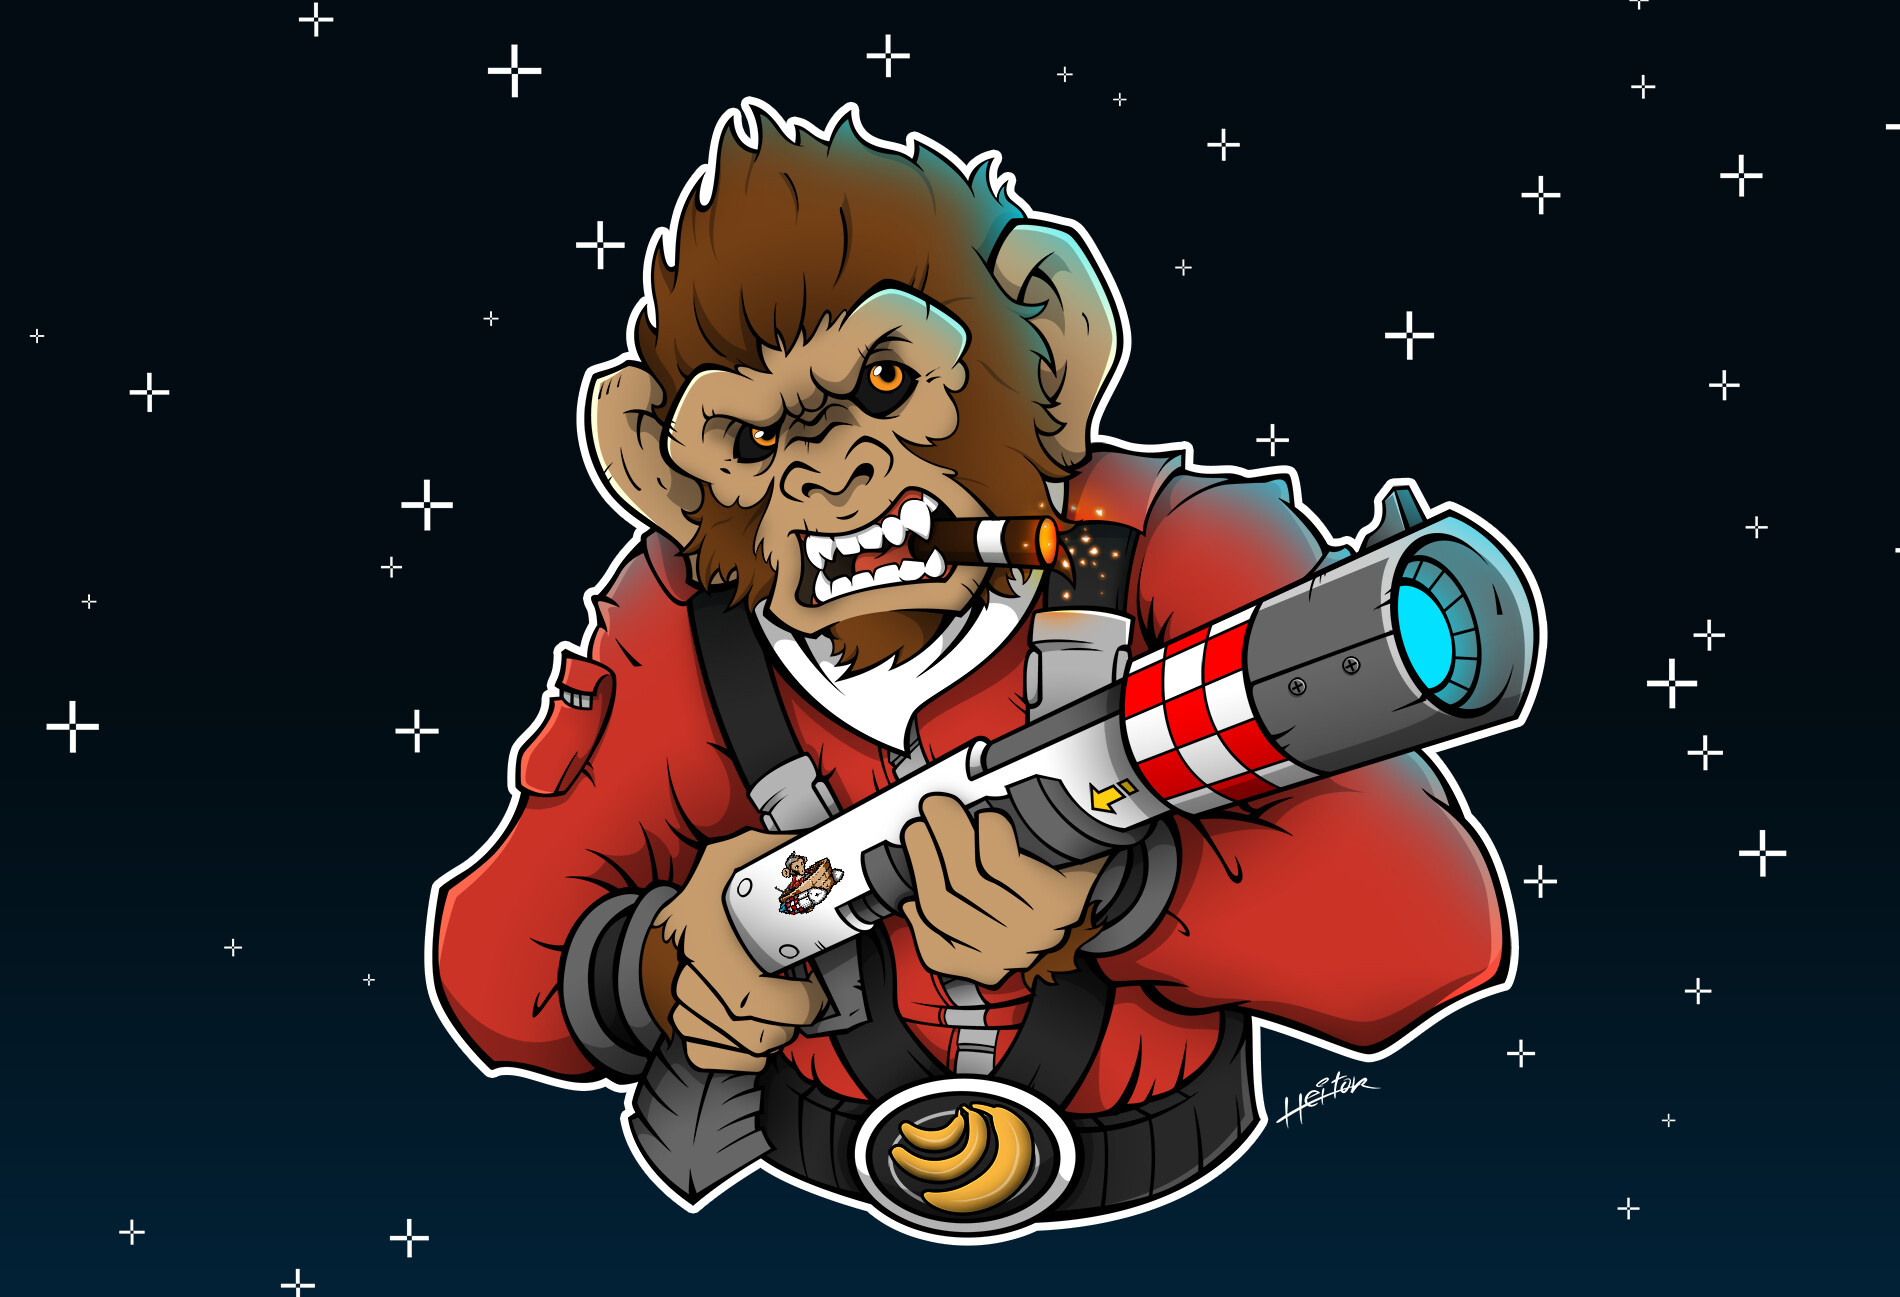 Pogo the Space Monkey